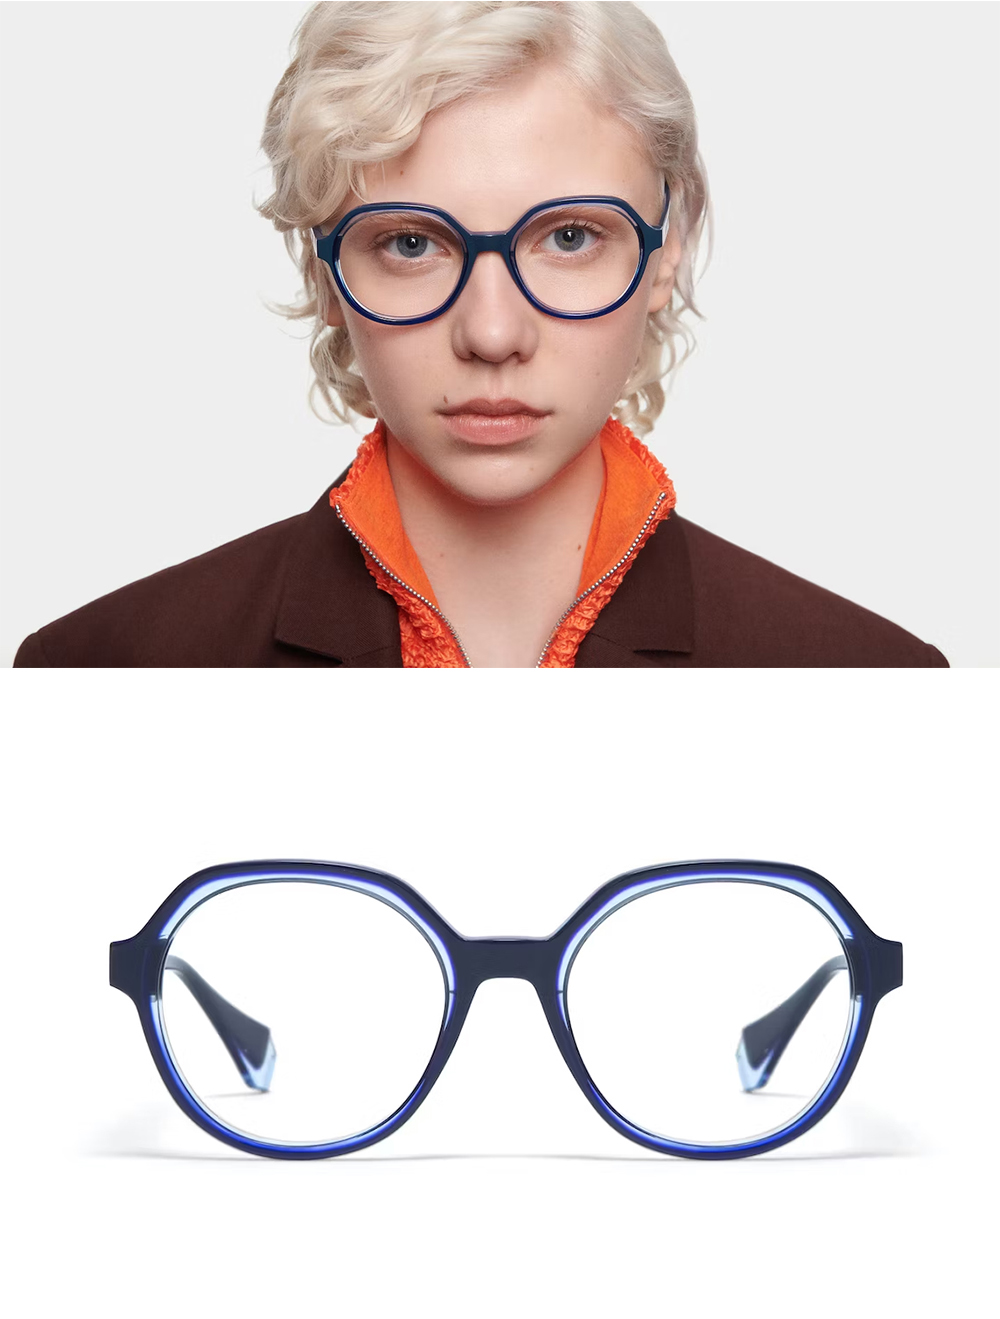 GIGI Studios 歐美俏皮內圈透明造型粗圓框光學眼鏡